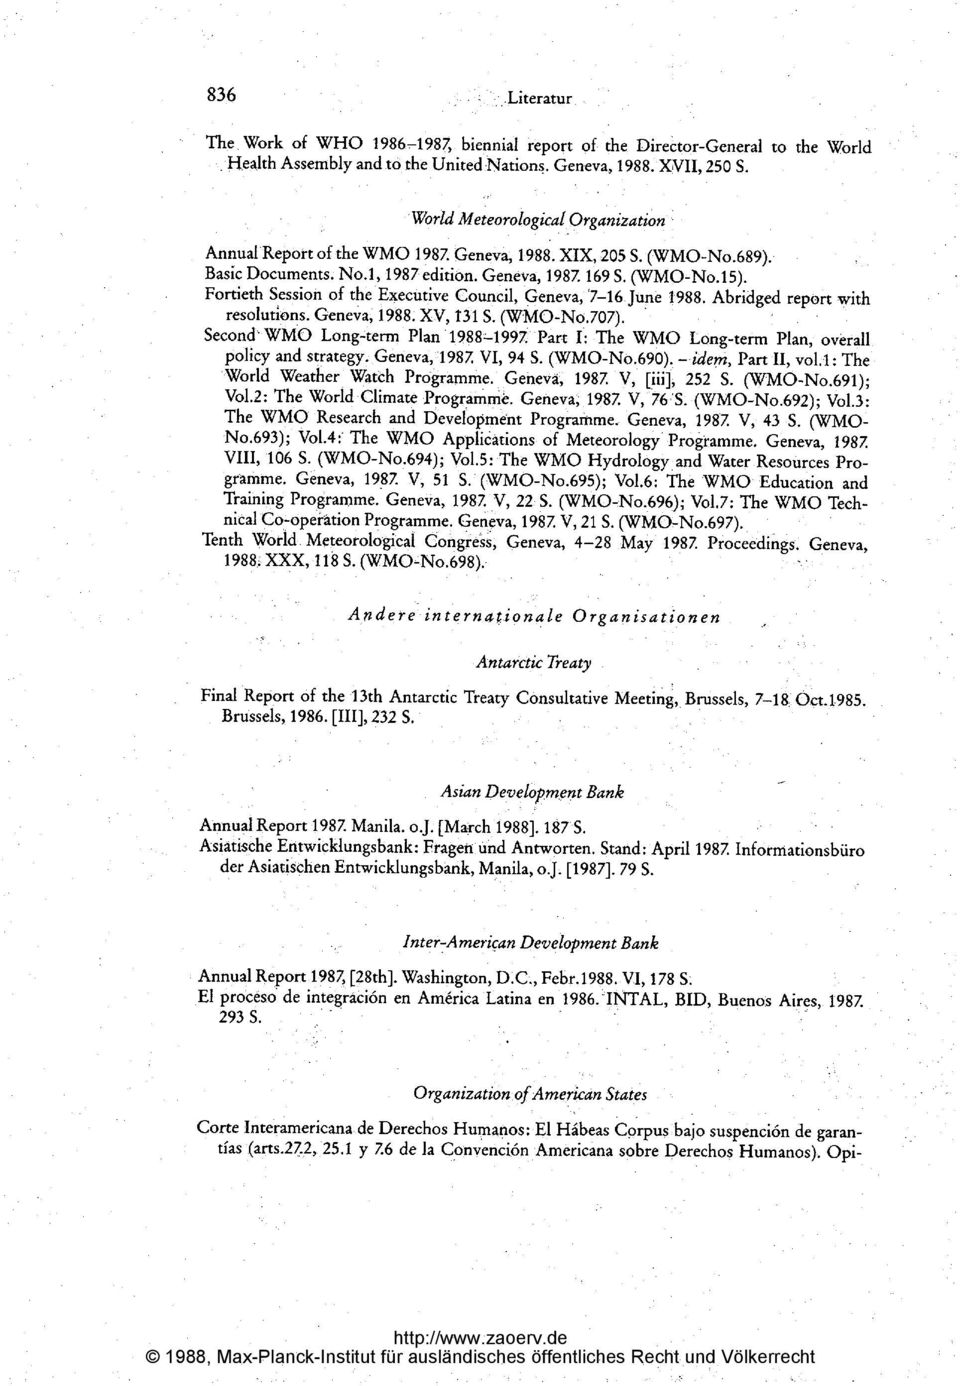 Fortieth Session of the ENecutive Council, Geneva,&apos;716 June 1988. Abridged report with resolutions. Geneva, 1988. XV, 131 S. (WMONo.707).